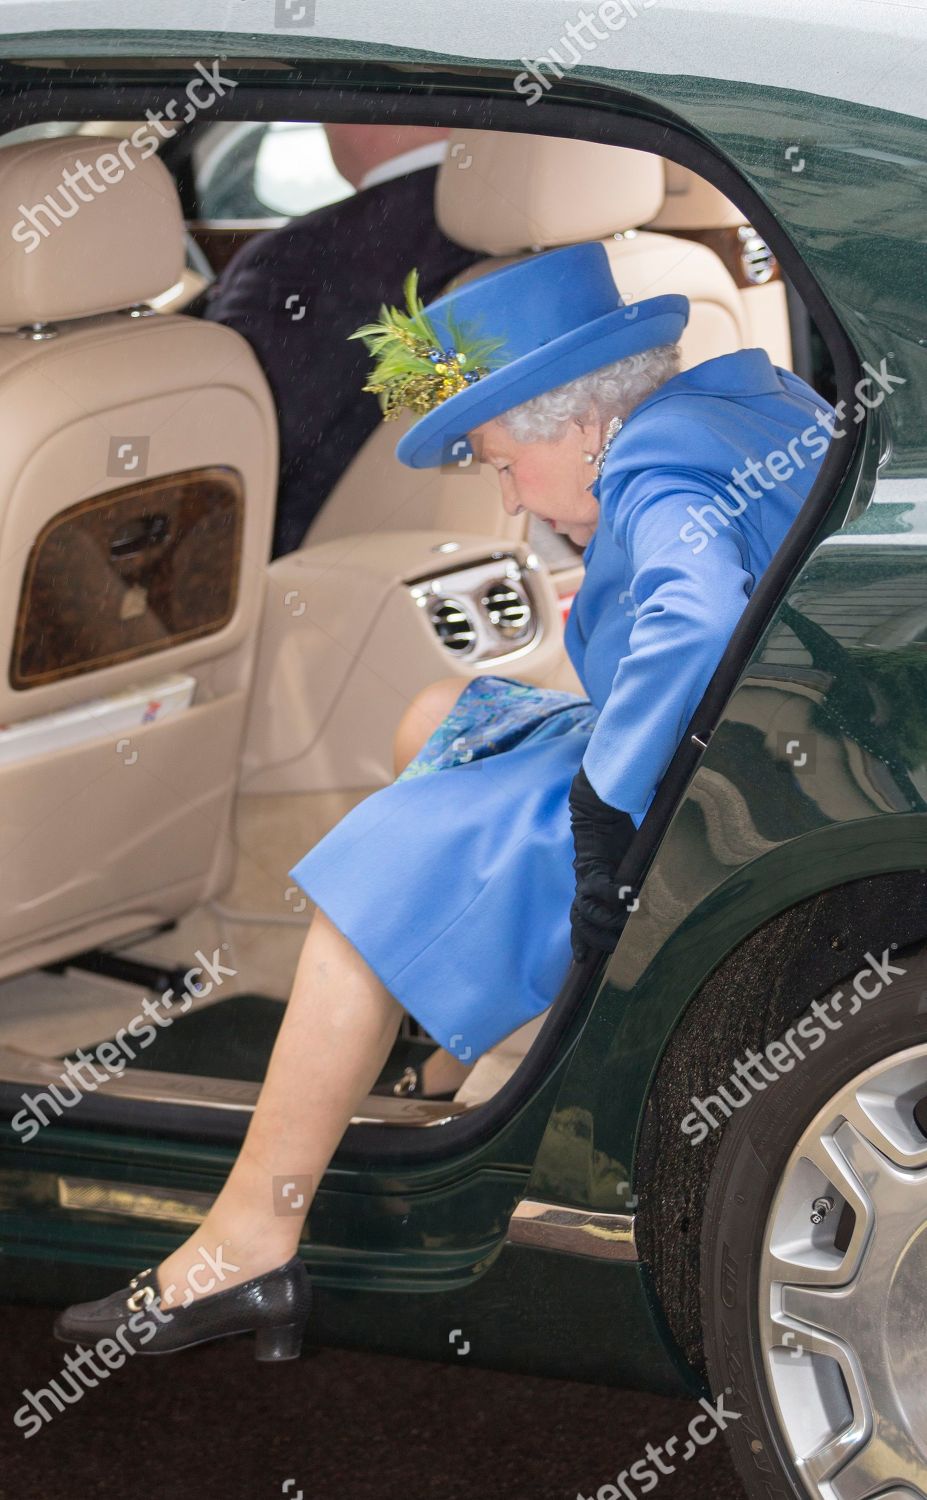 queen-elizabeth-ii-visits-the-royal-air-force-club-london-uk-shutterstock-editorial-9935966d.jpg